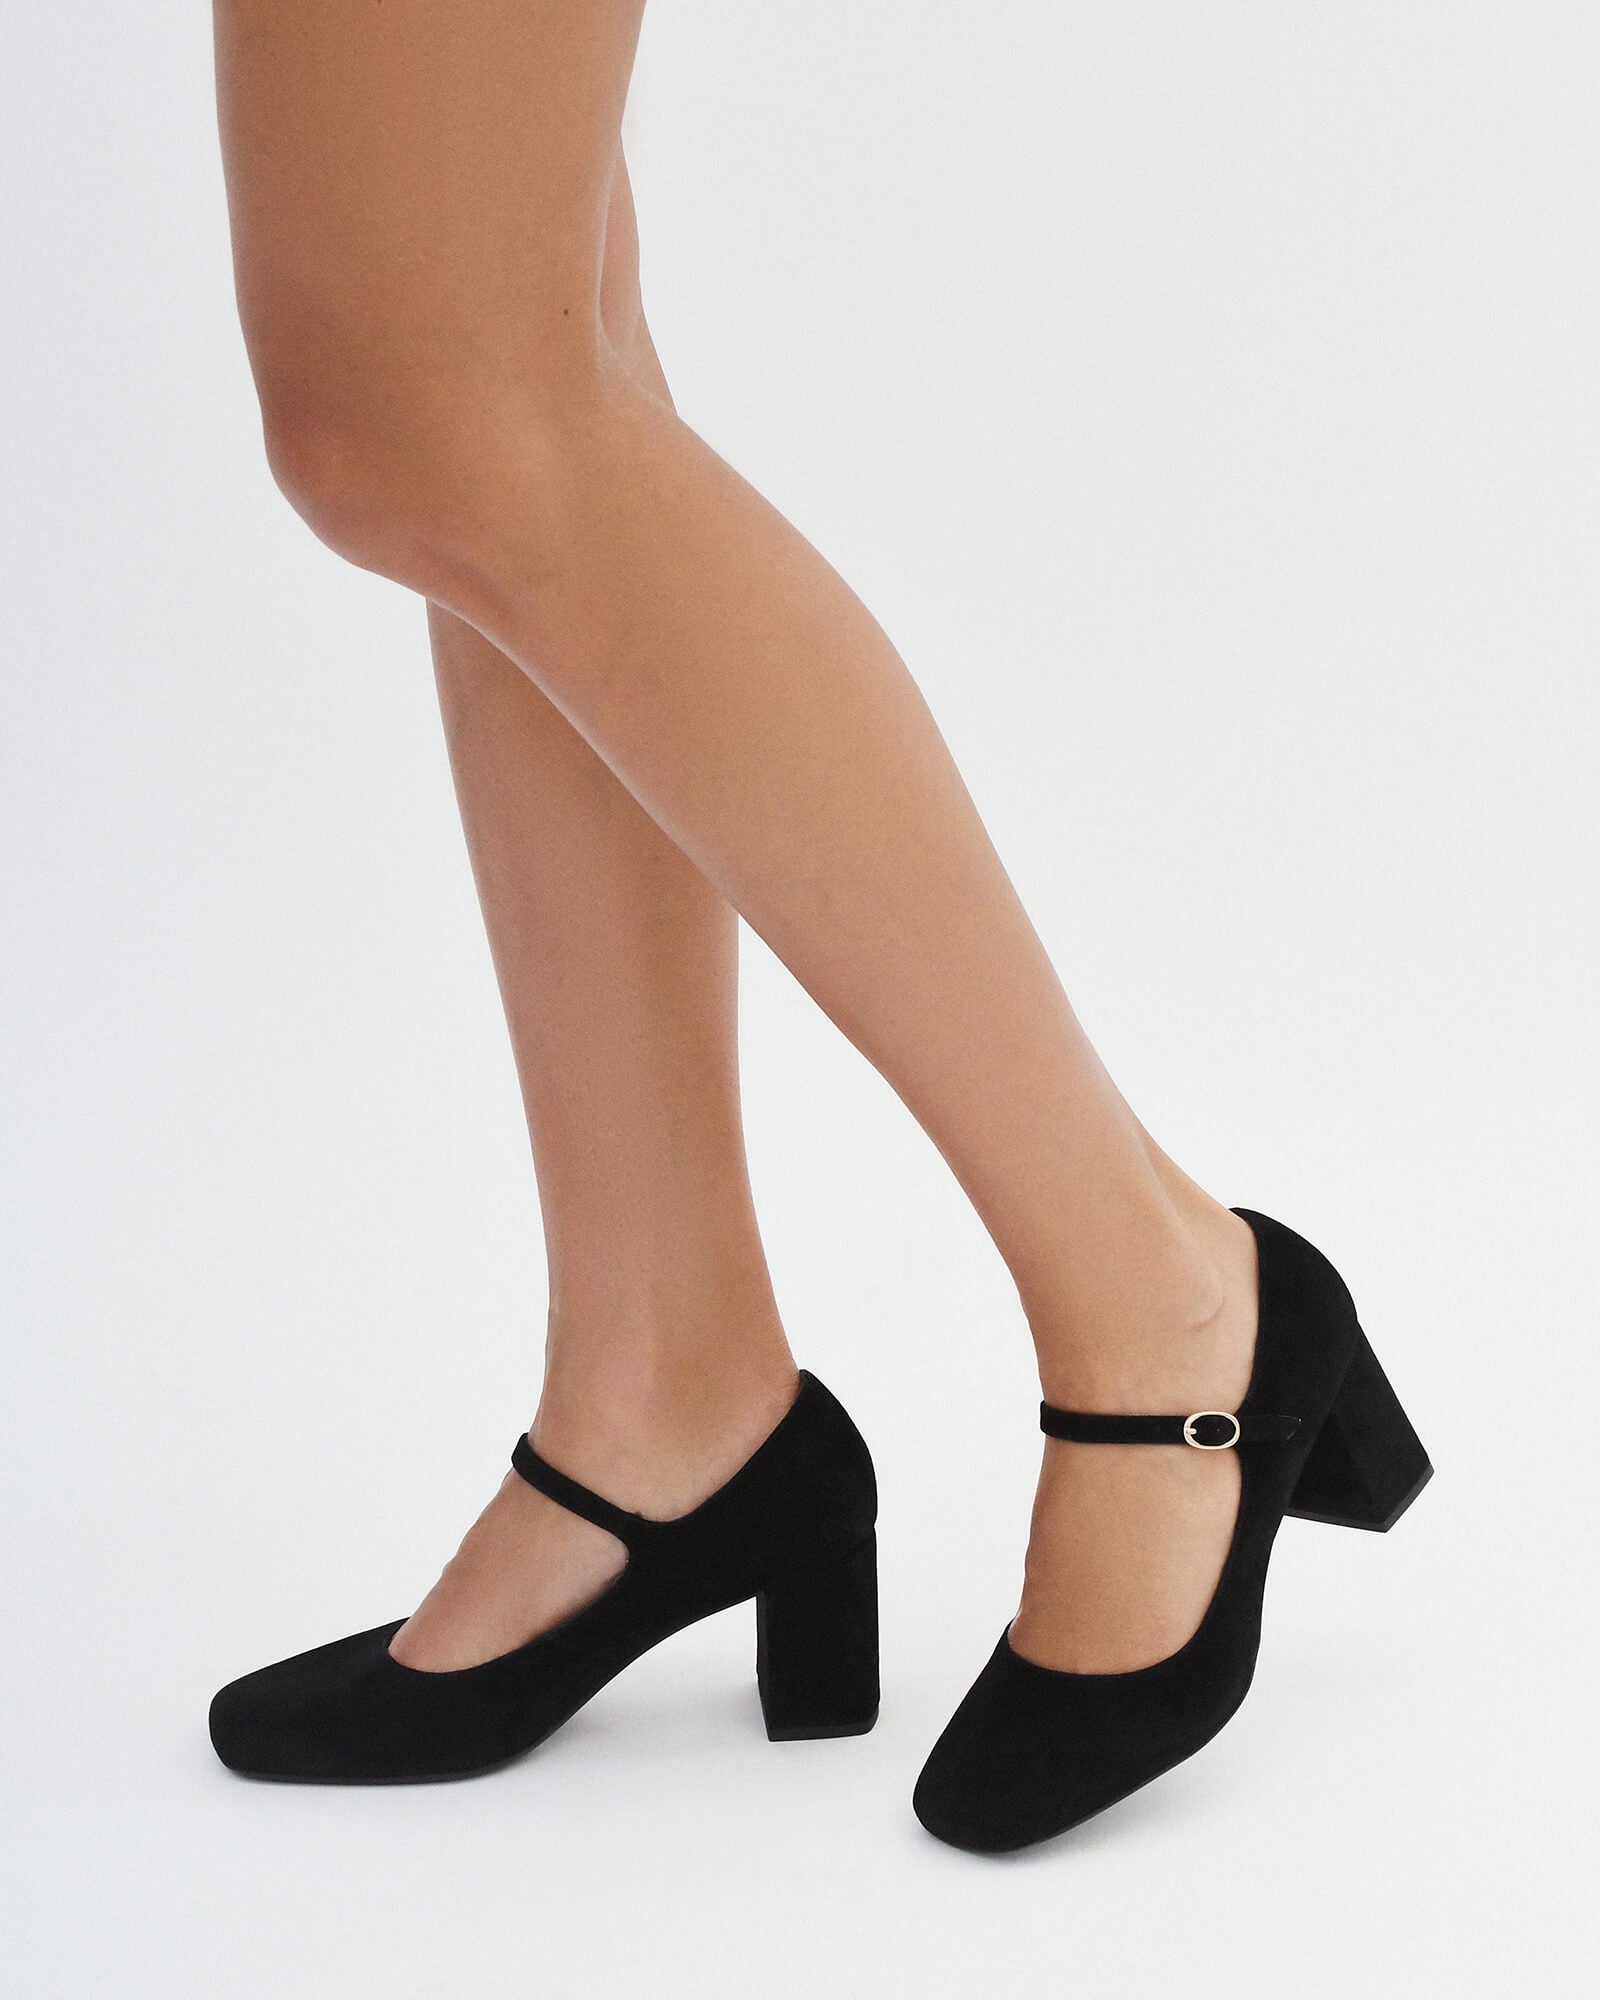 Escada Black Suede/Patent Leather Block Heels sz 9.5